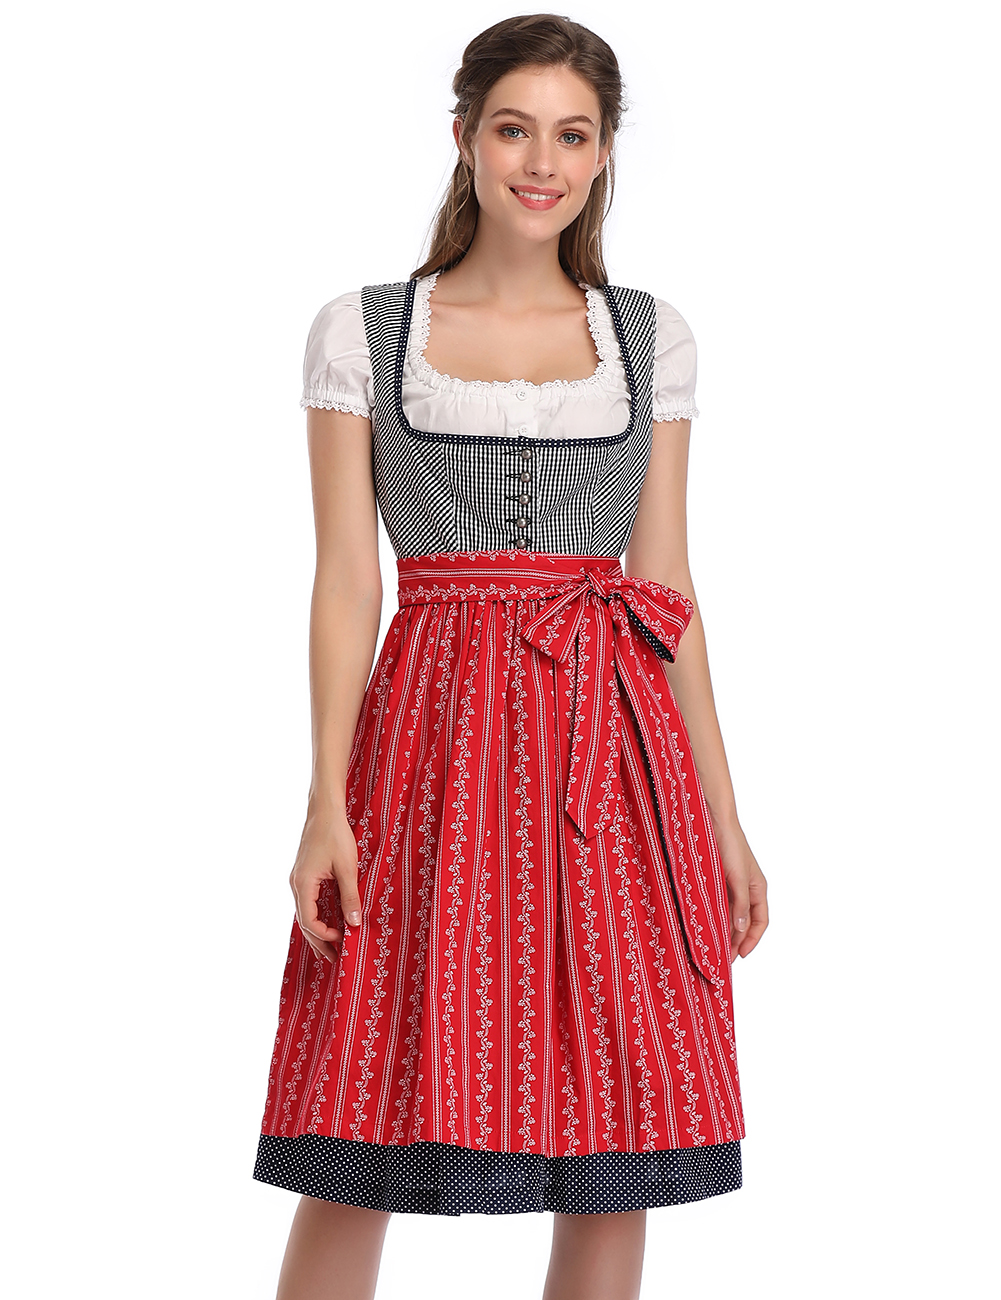 KOJOOIN Women's Vintage Embroidery German Dirndl Dress Costumes for Bavarian Oktoberfest Halloween Carnival